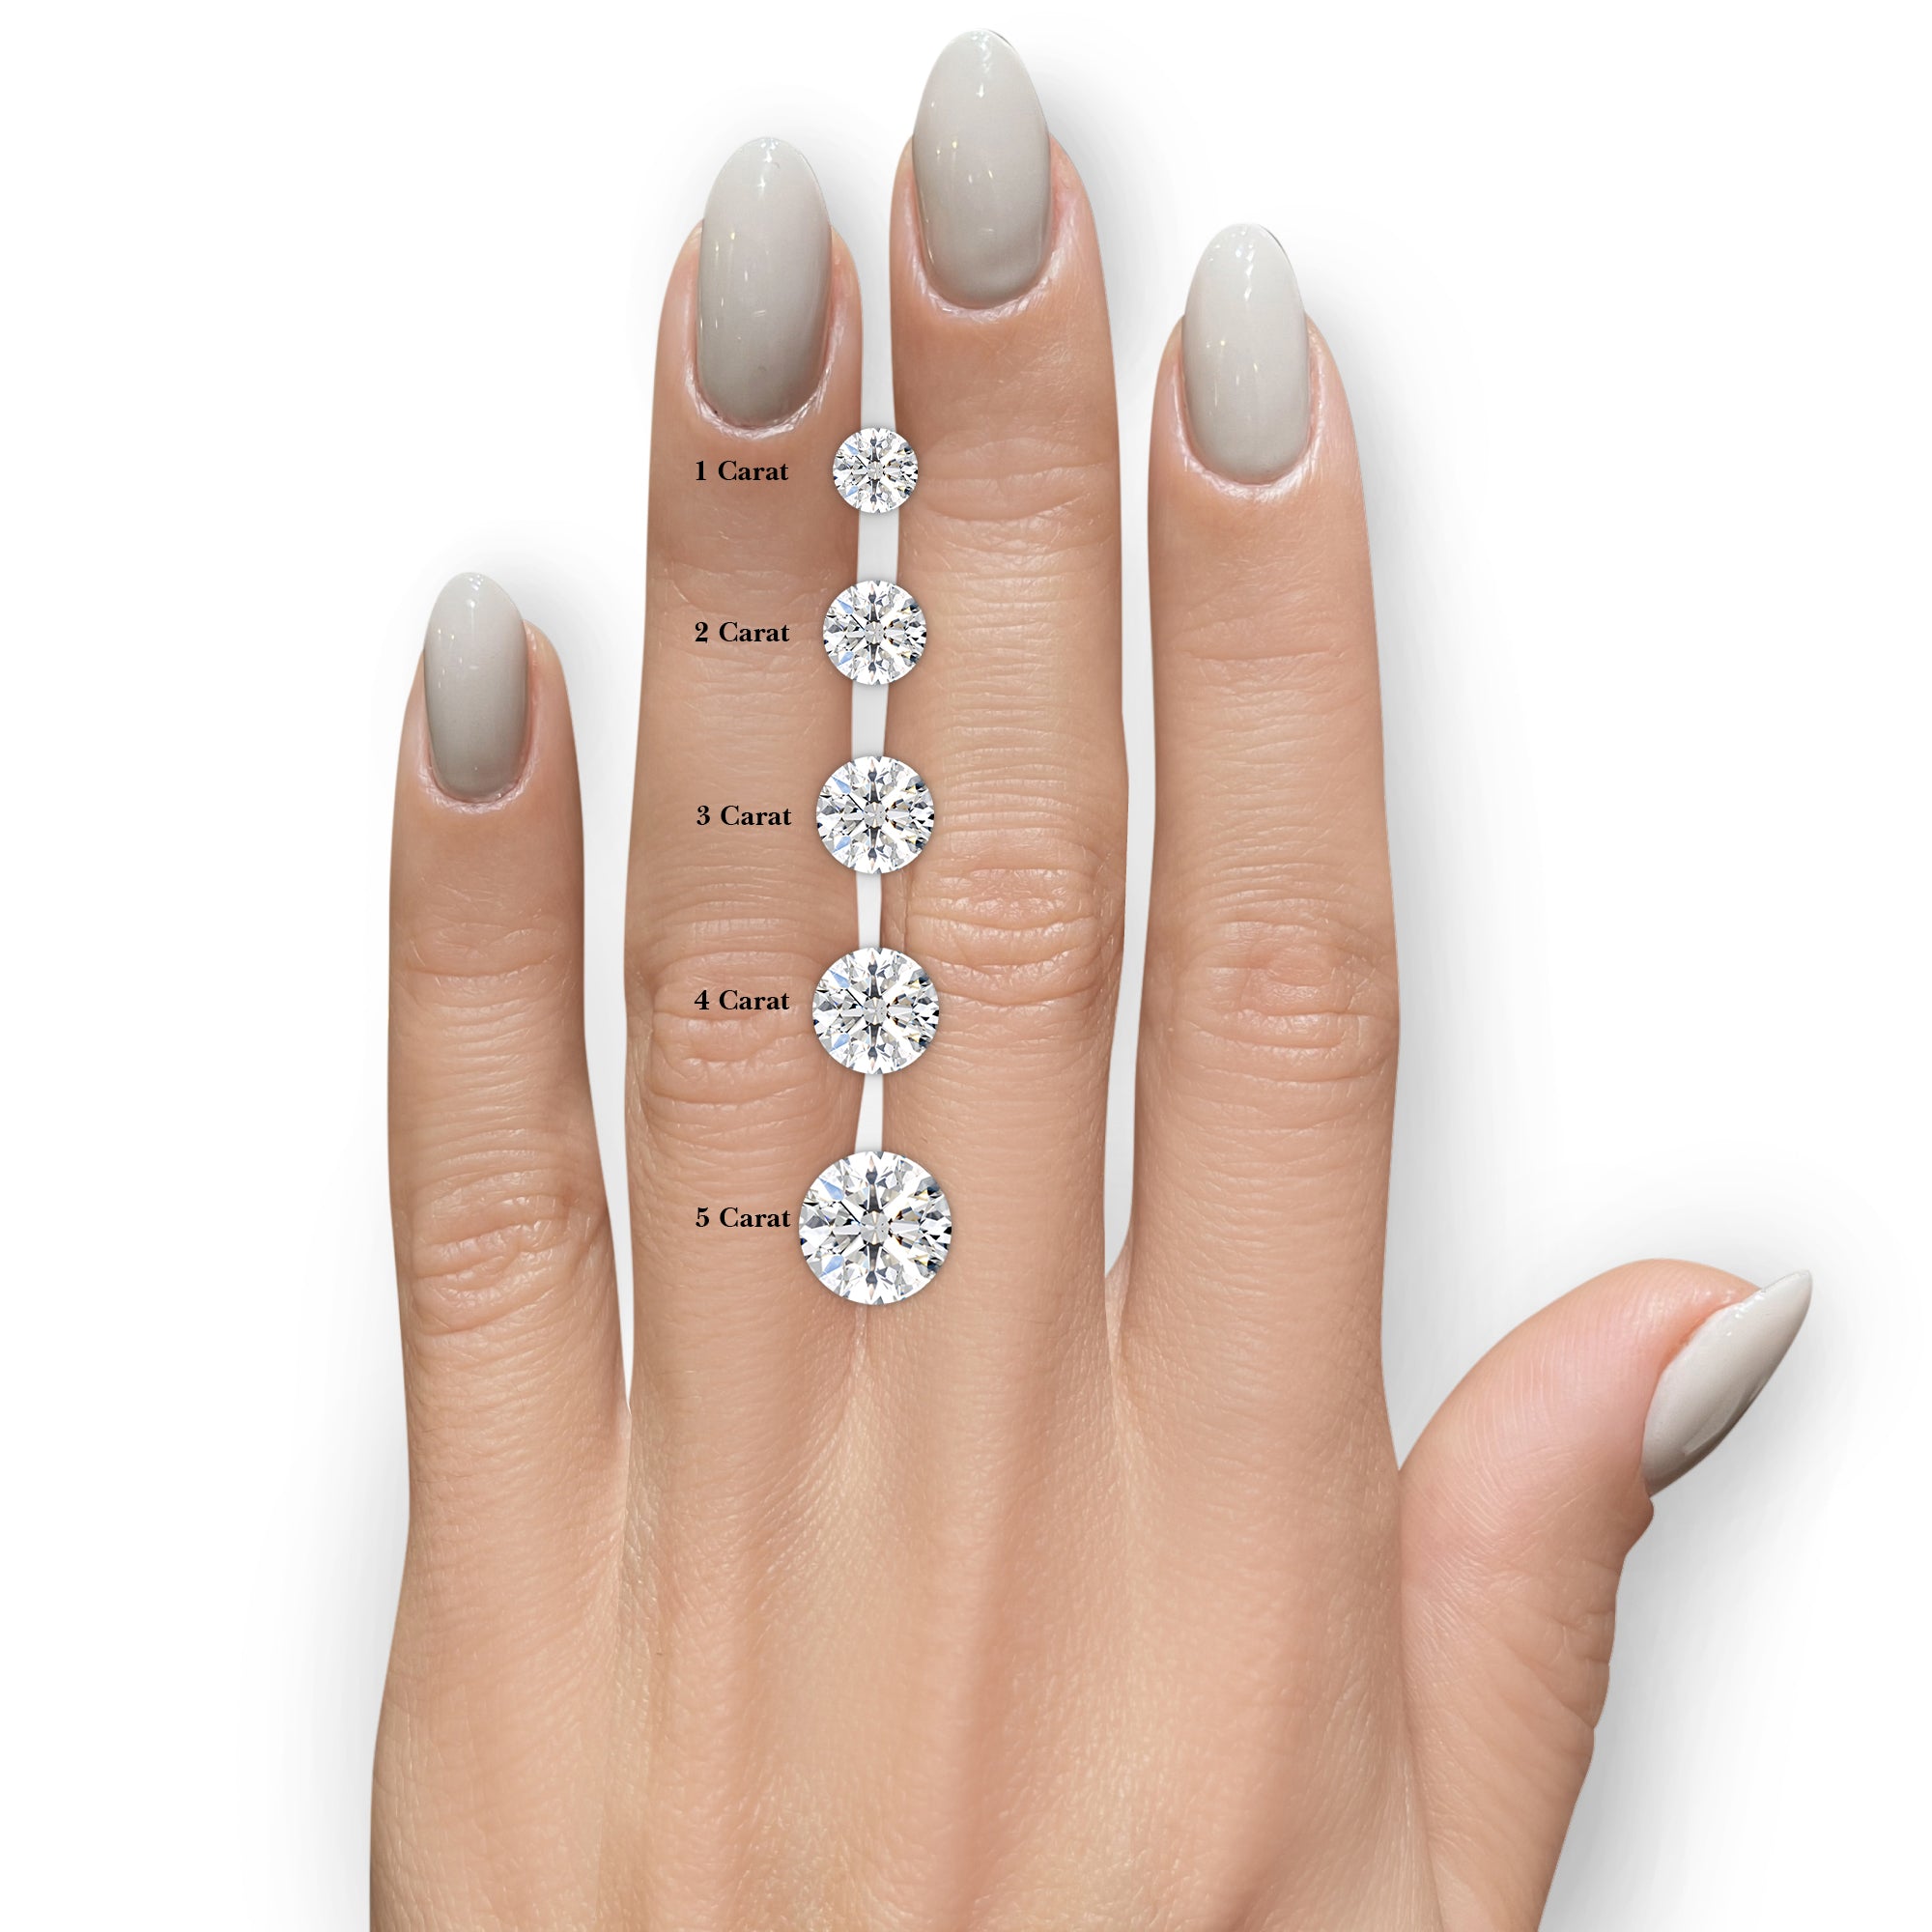 Sienna Diamond Engagement Ring -Platinum